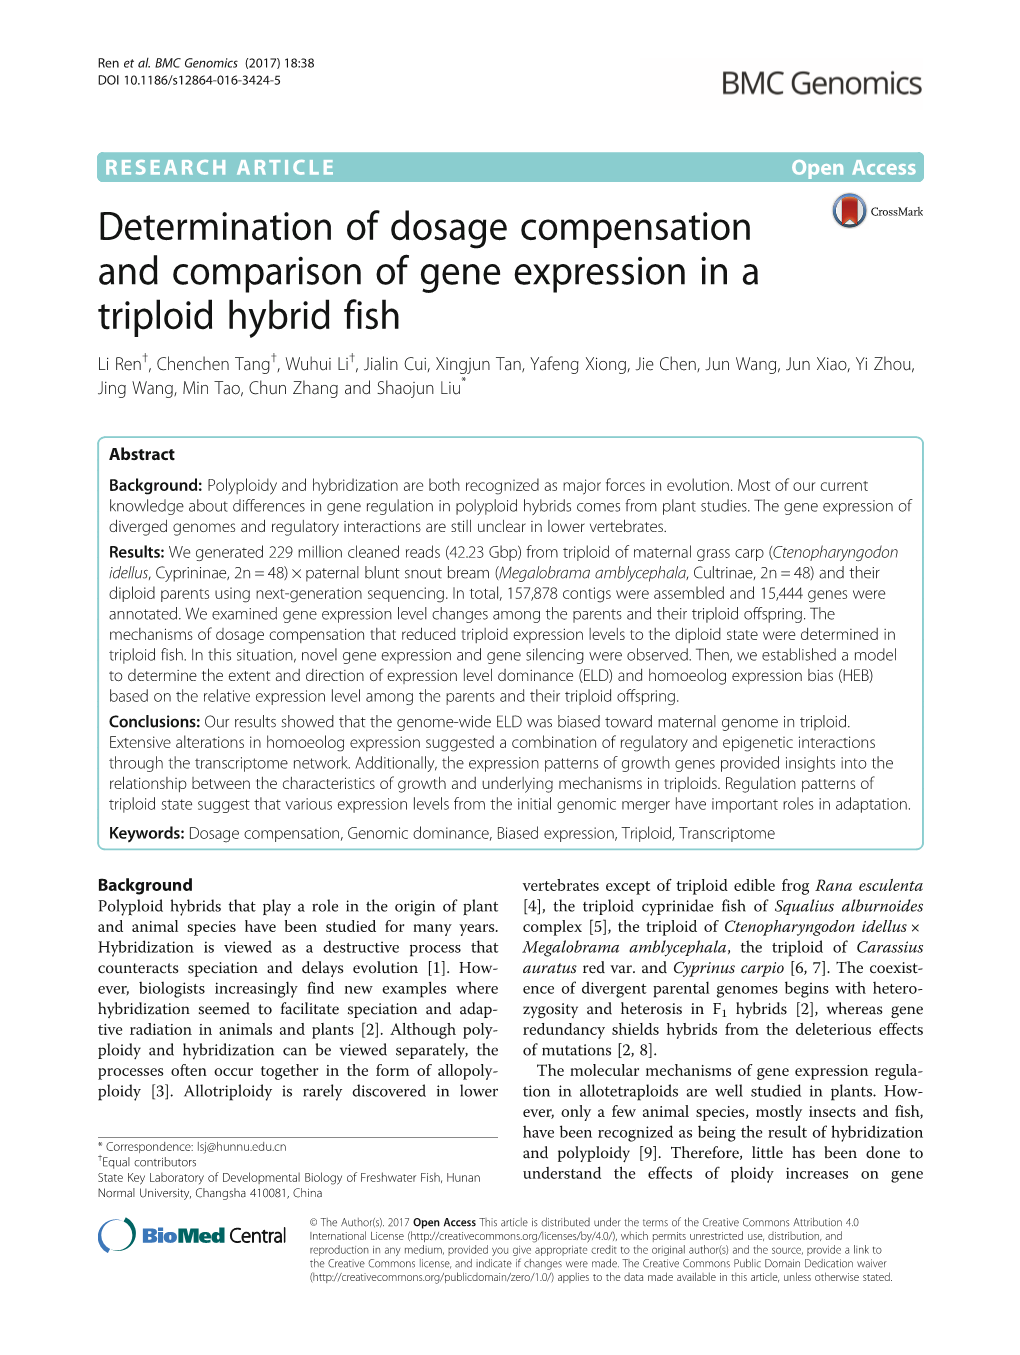 Determination of Dosage Compensation and Comparison Of